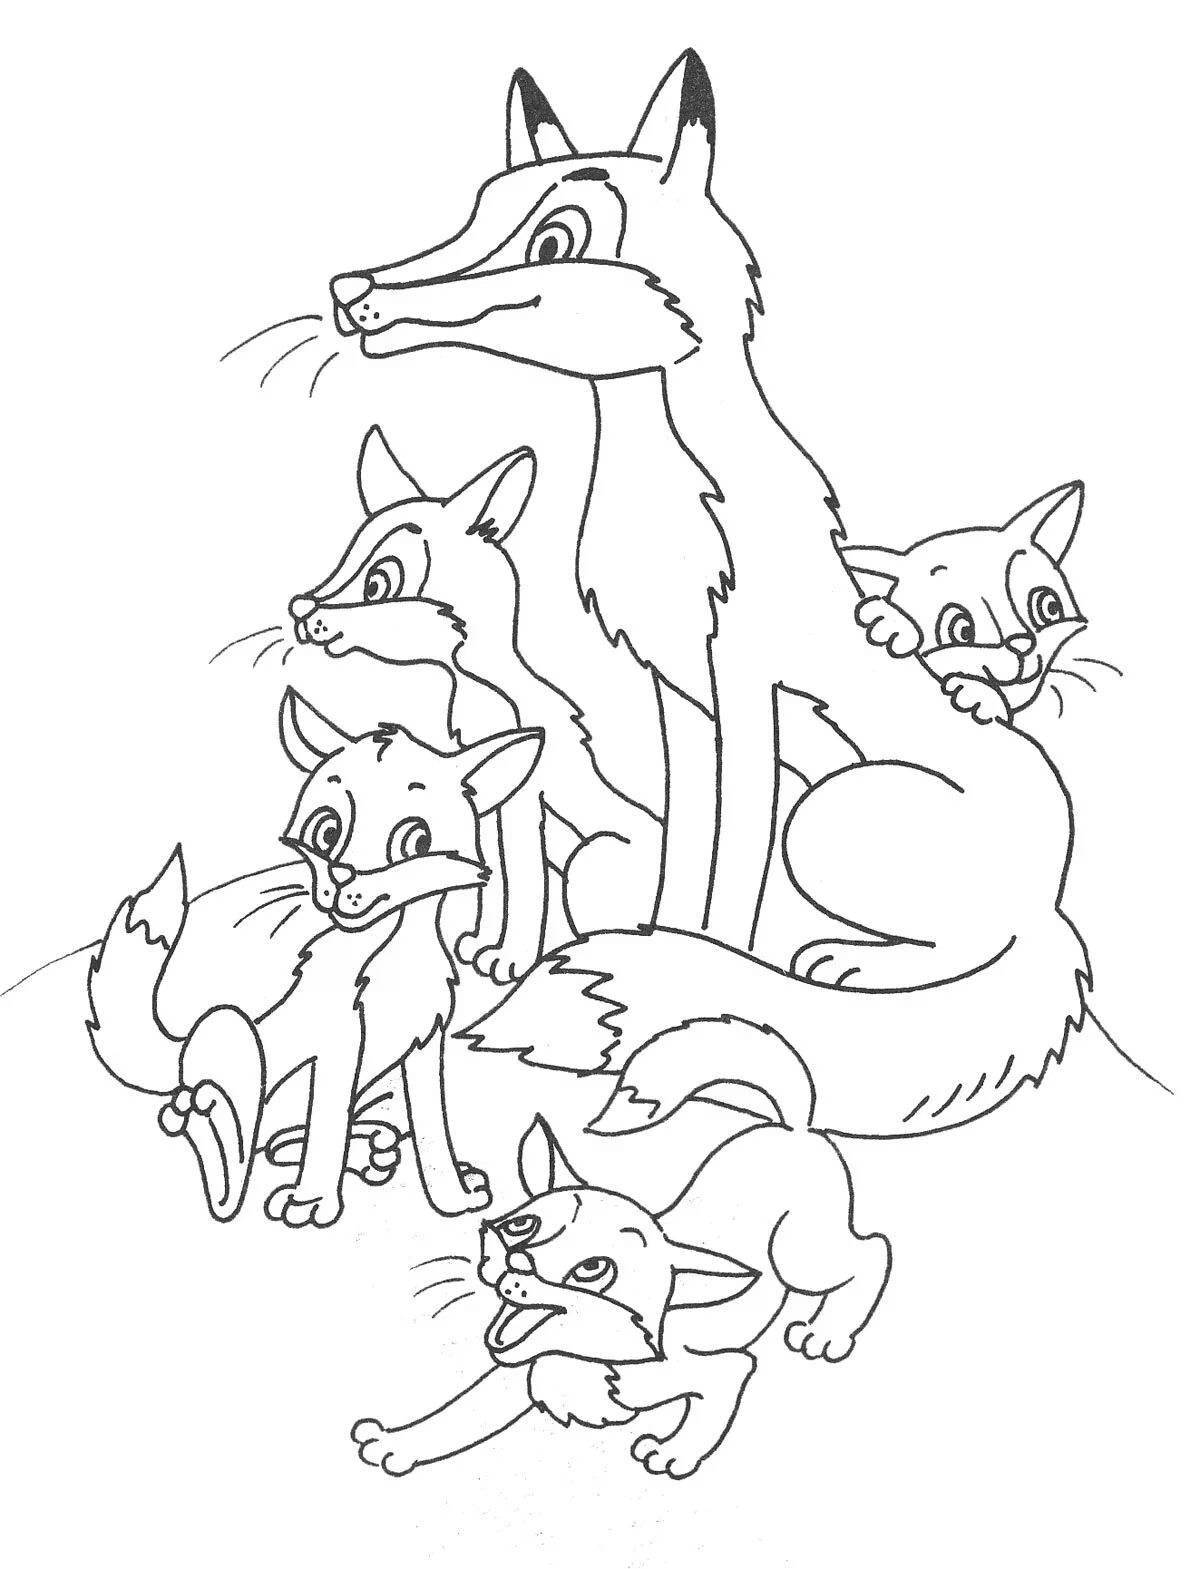 Fluffy fox coloring book